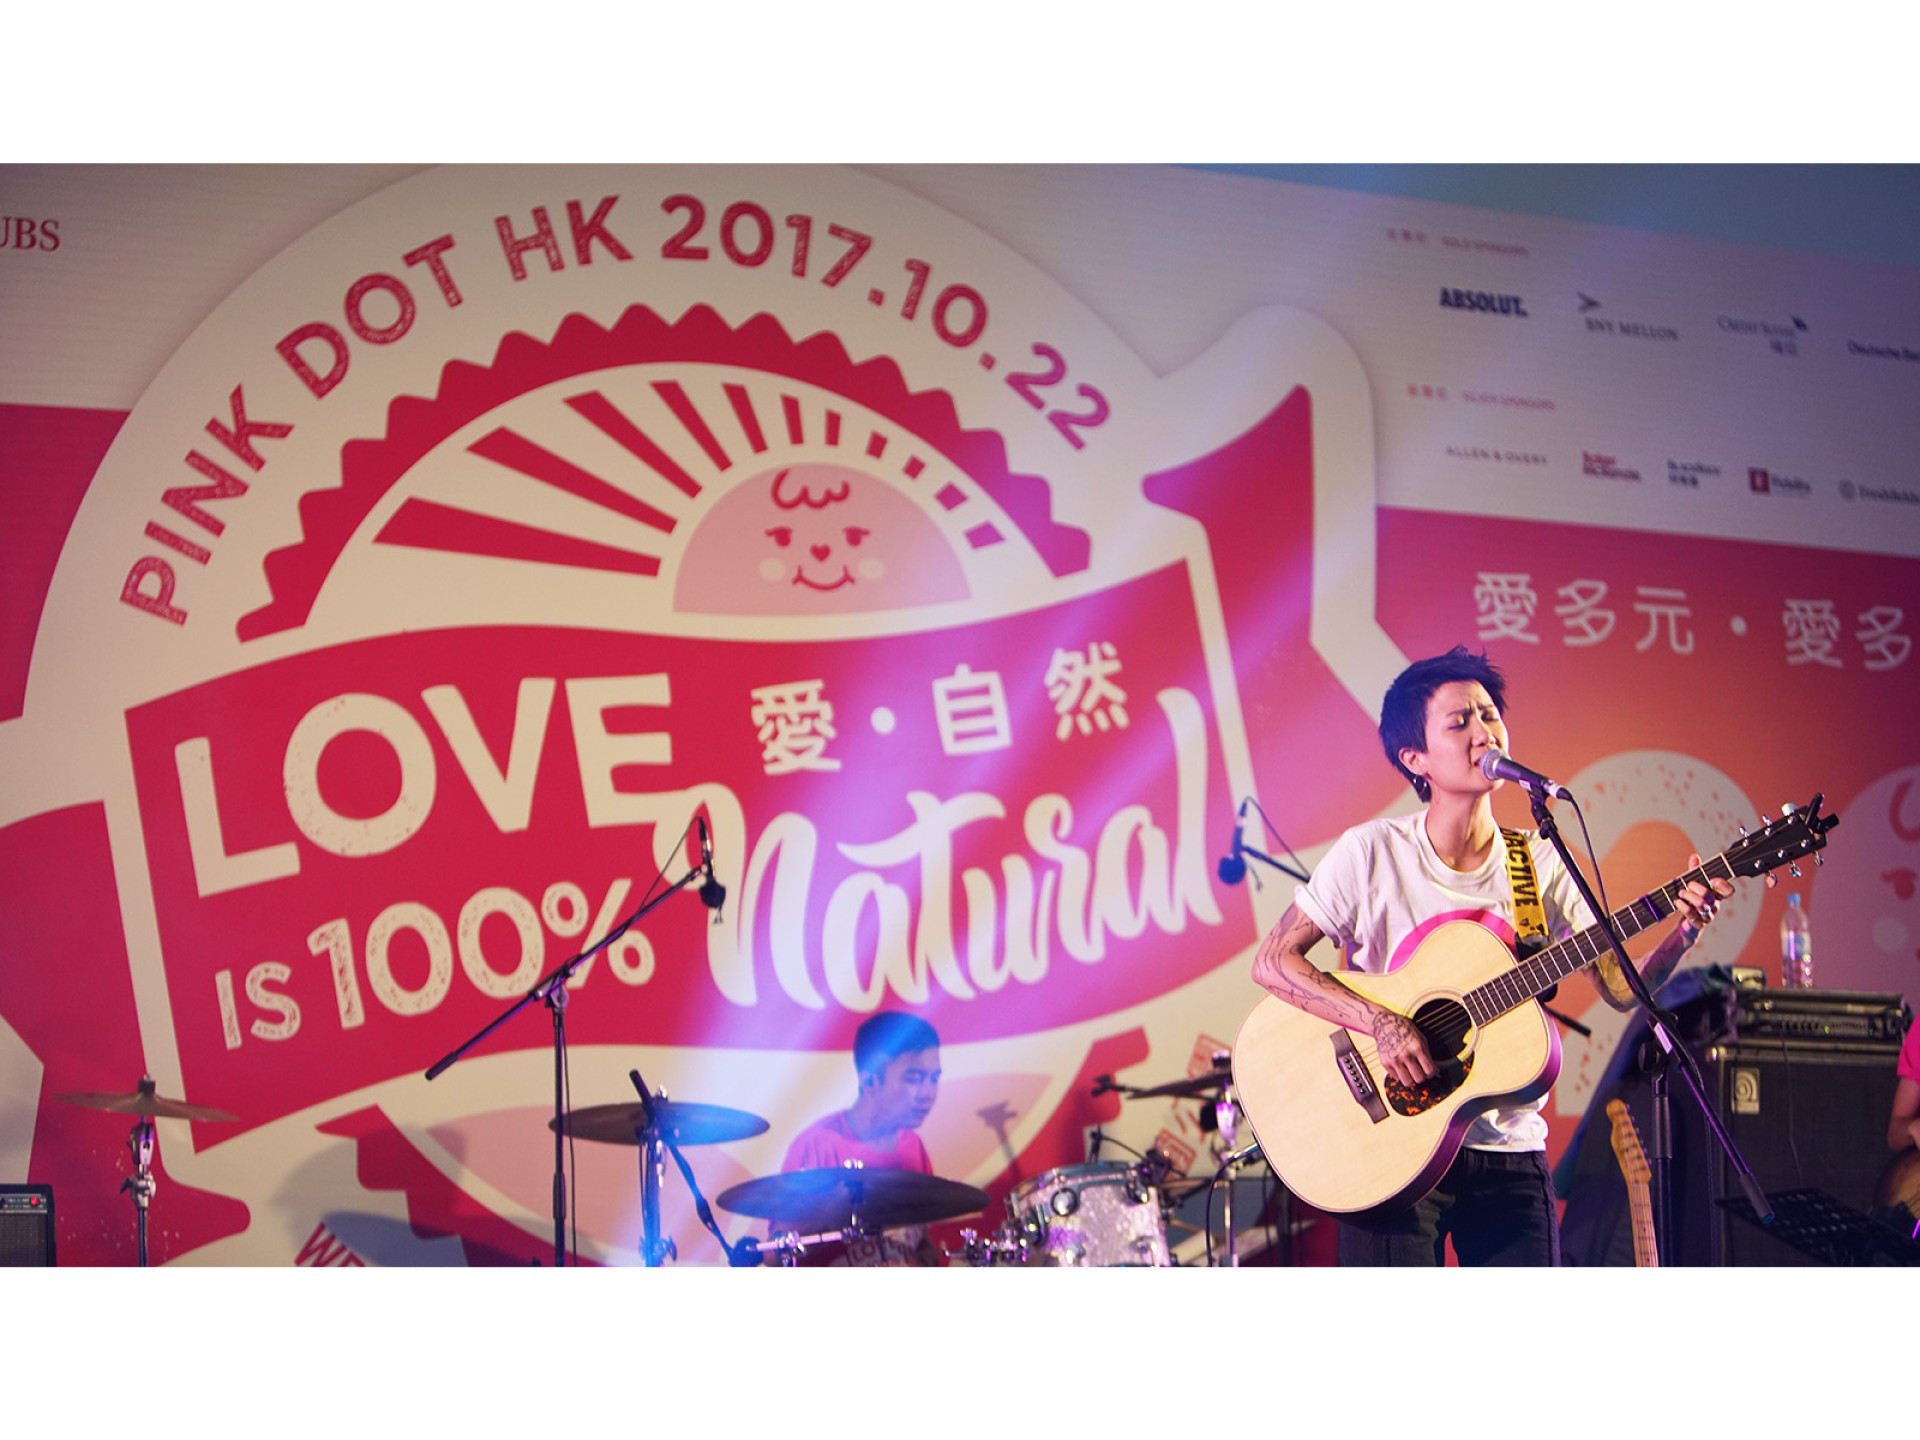 PInk Dot Hong Kong event backdrop design and production